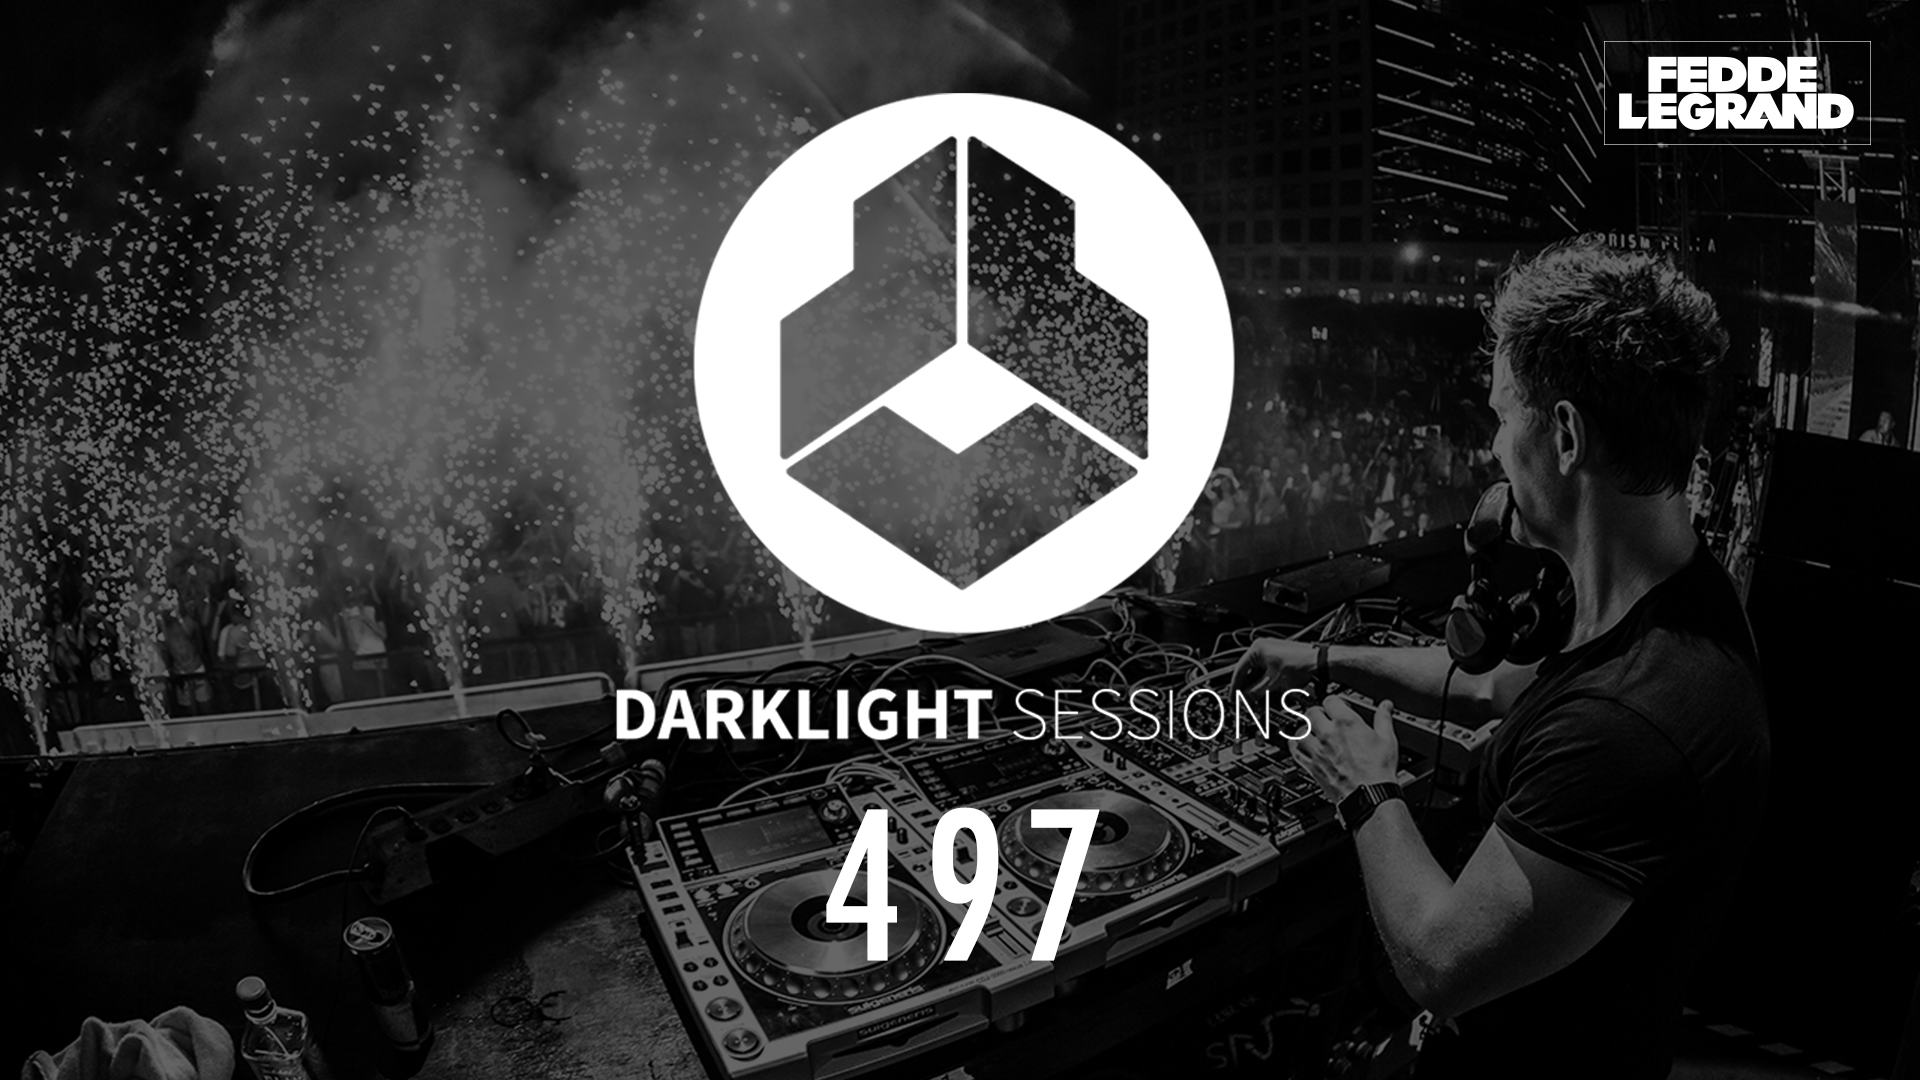 Darklight Sessions 497